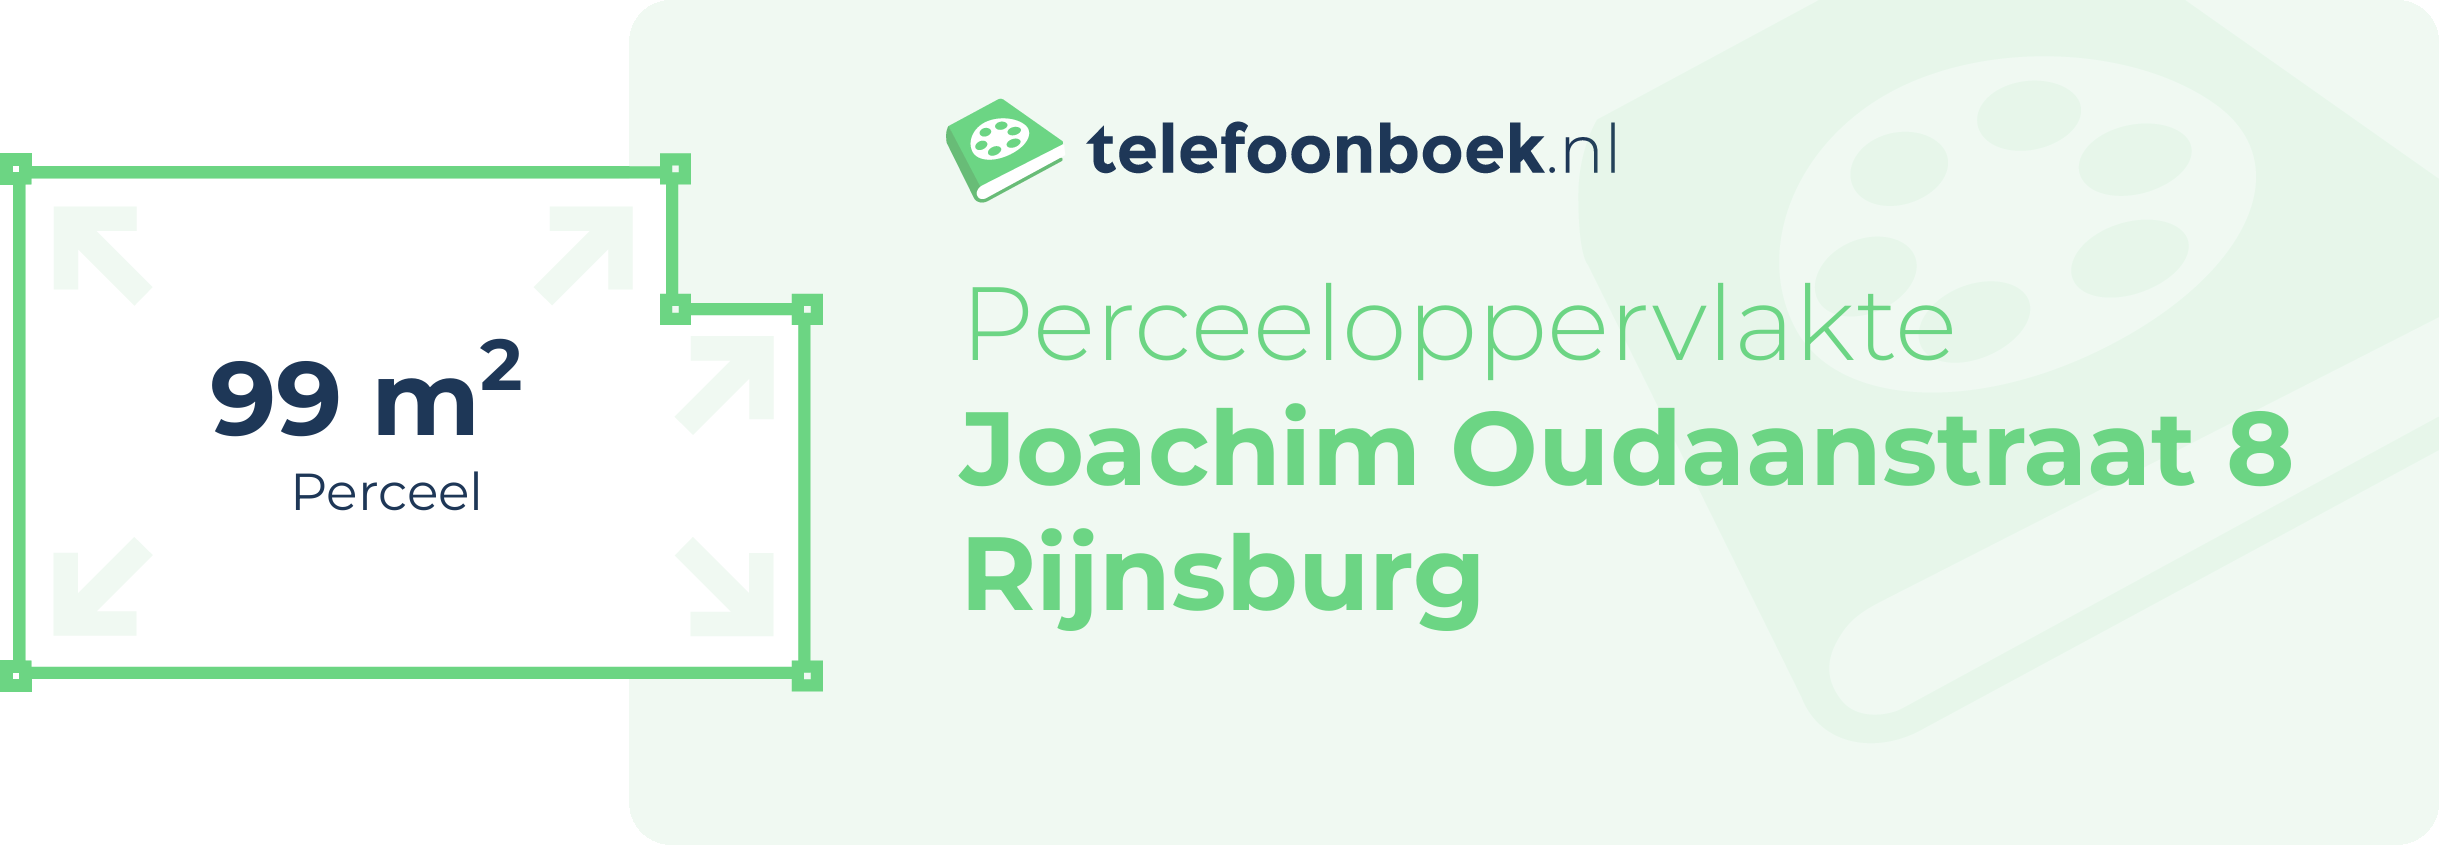 Perceeloppervlakte Joachim Oudaanstraat 8 Rijnsburg